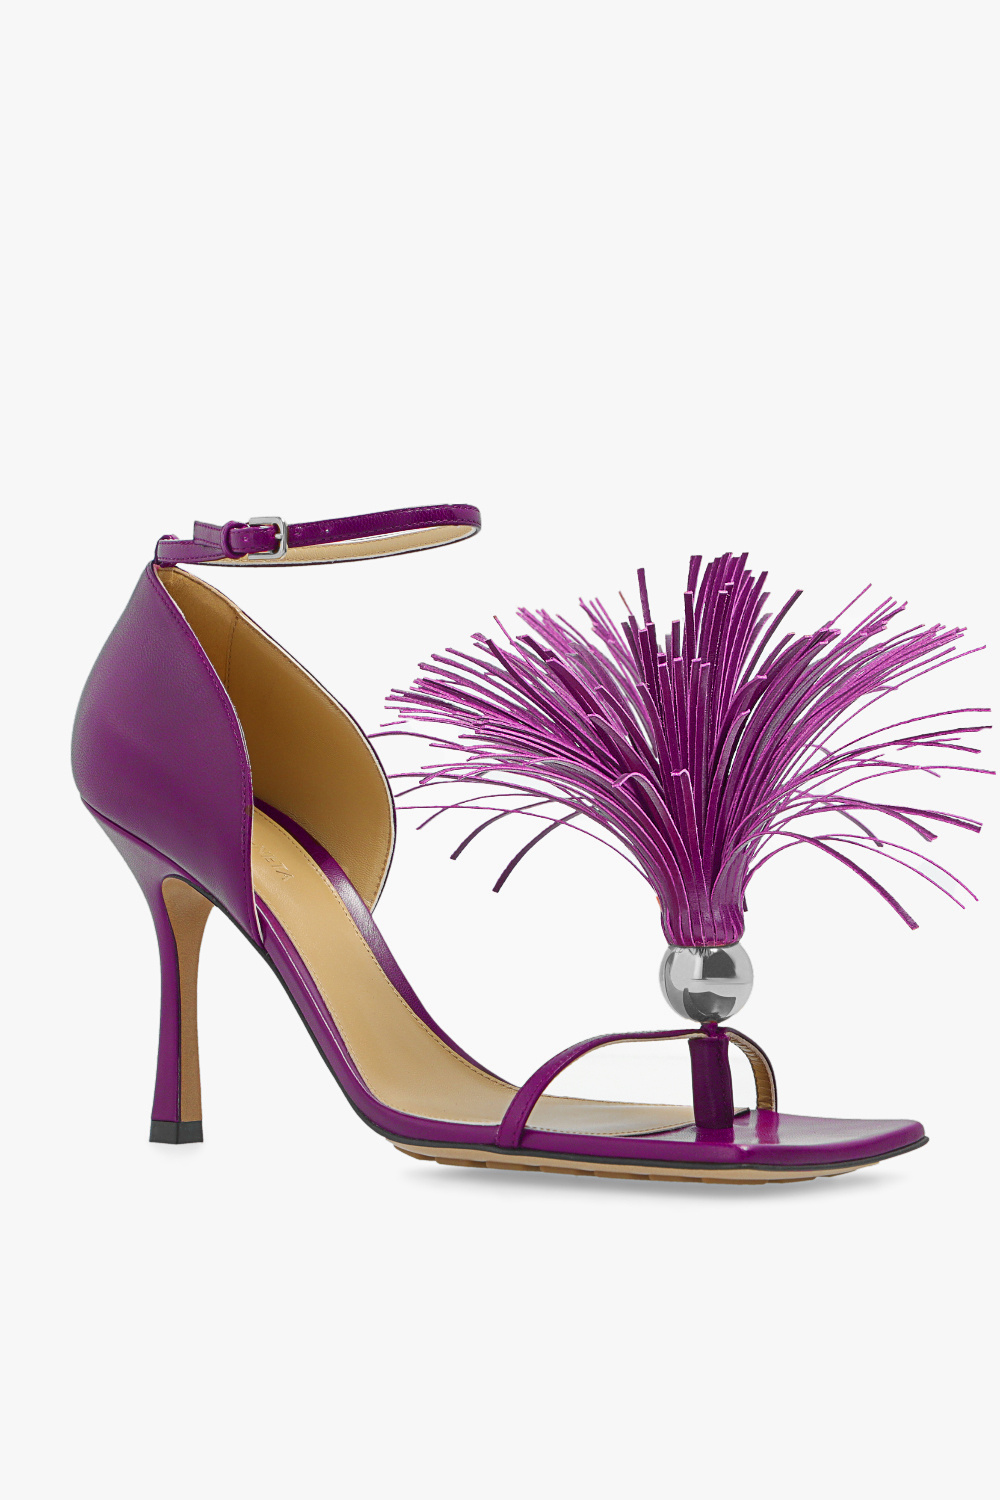 bottega The Veneta ‘Stretch’ heeled sandals